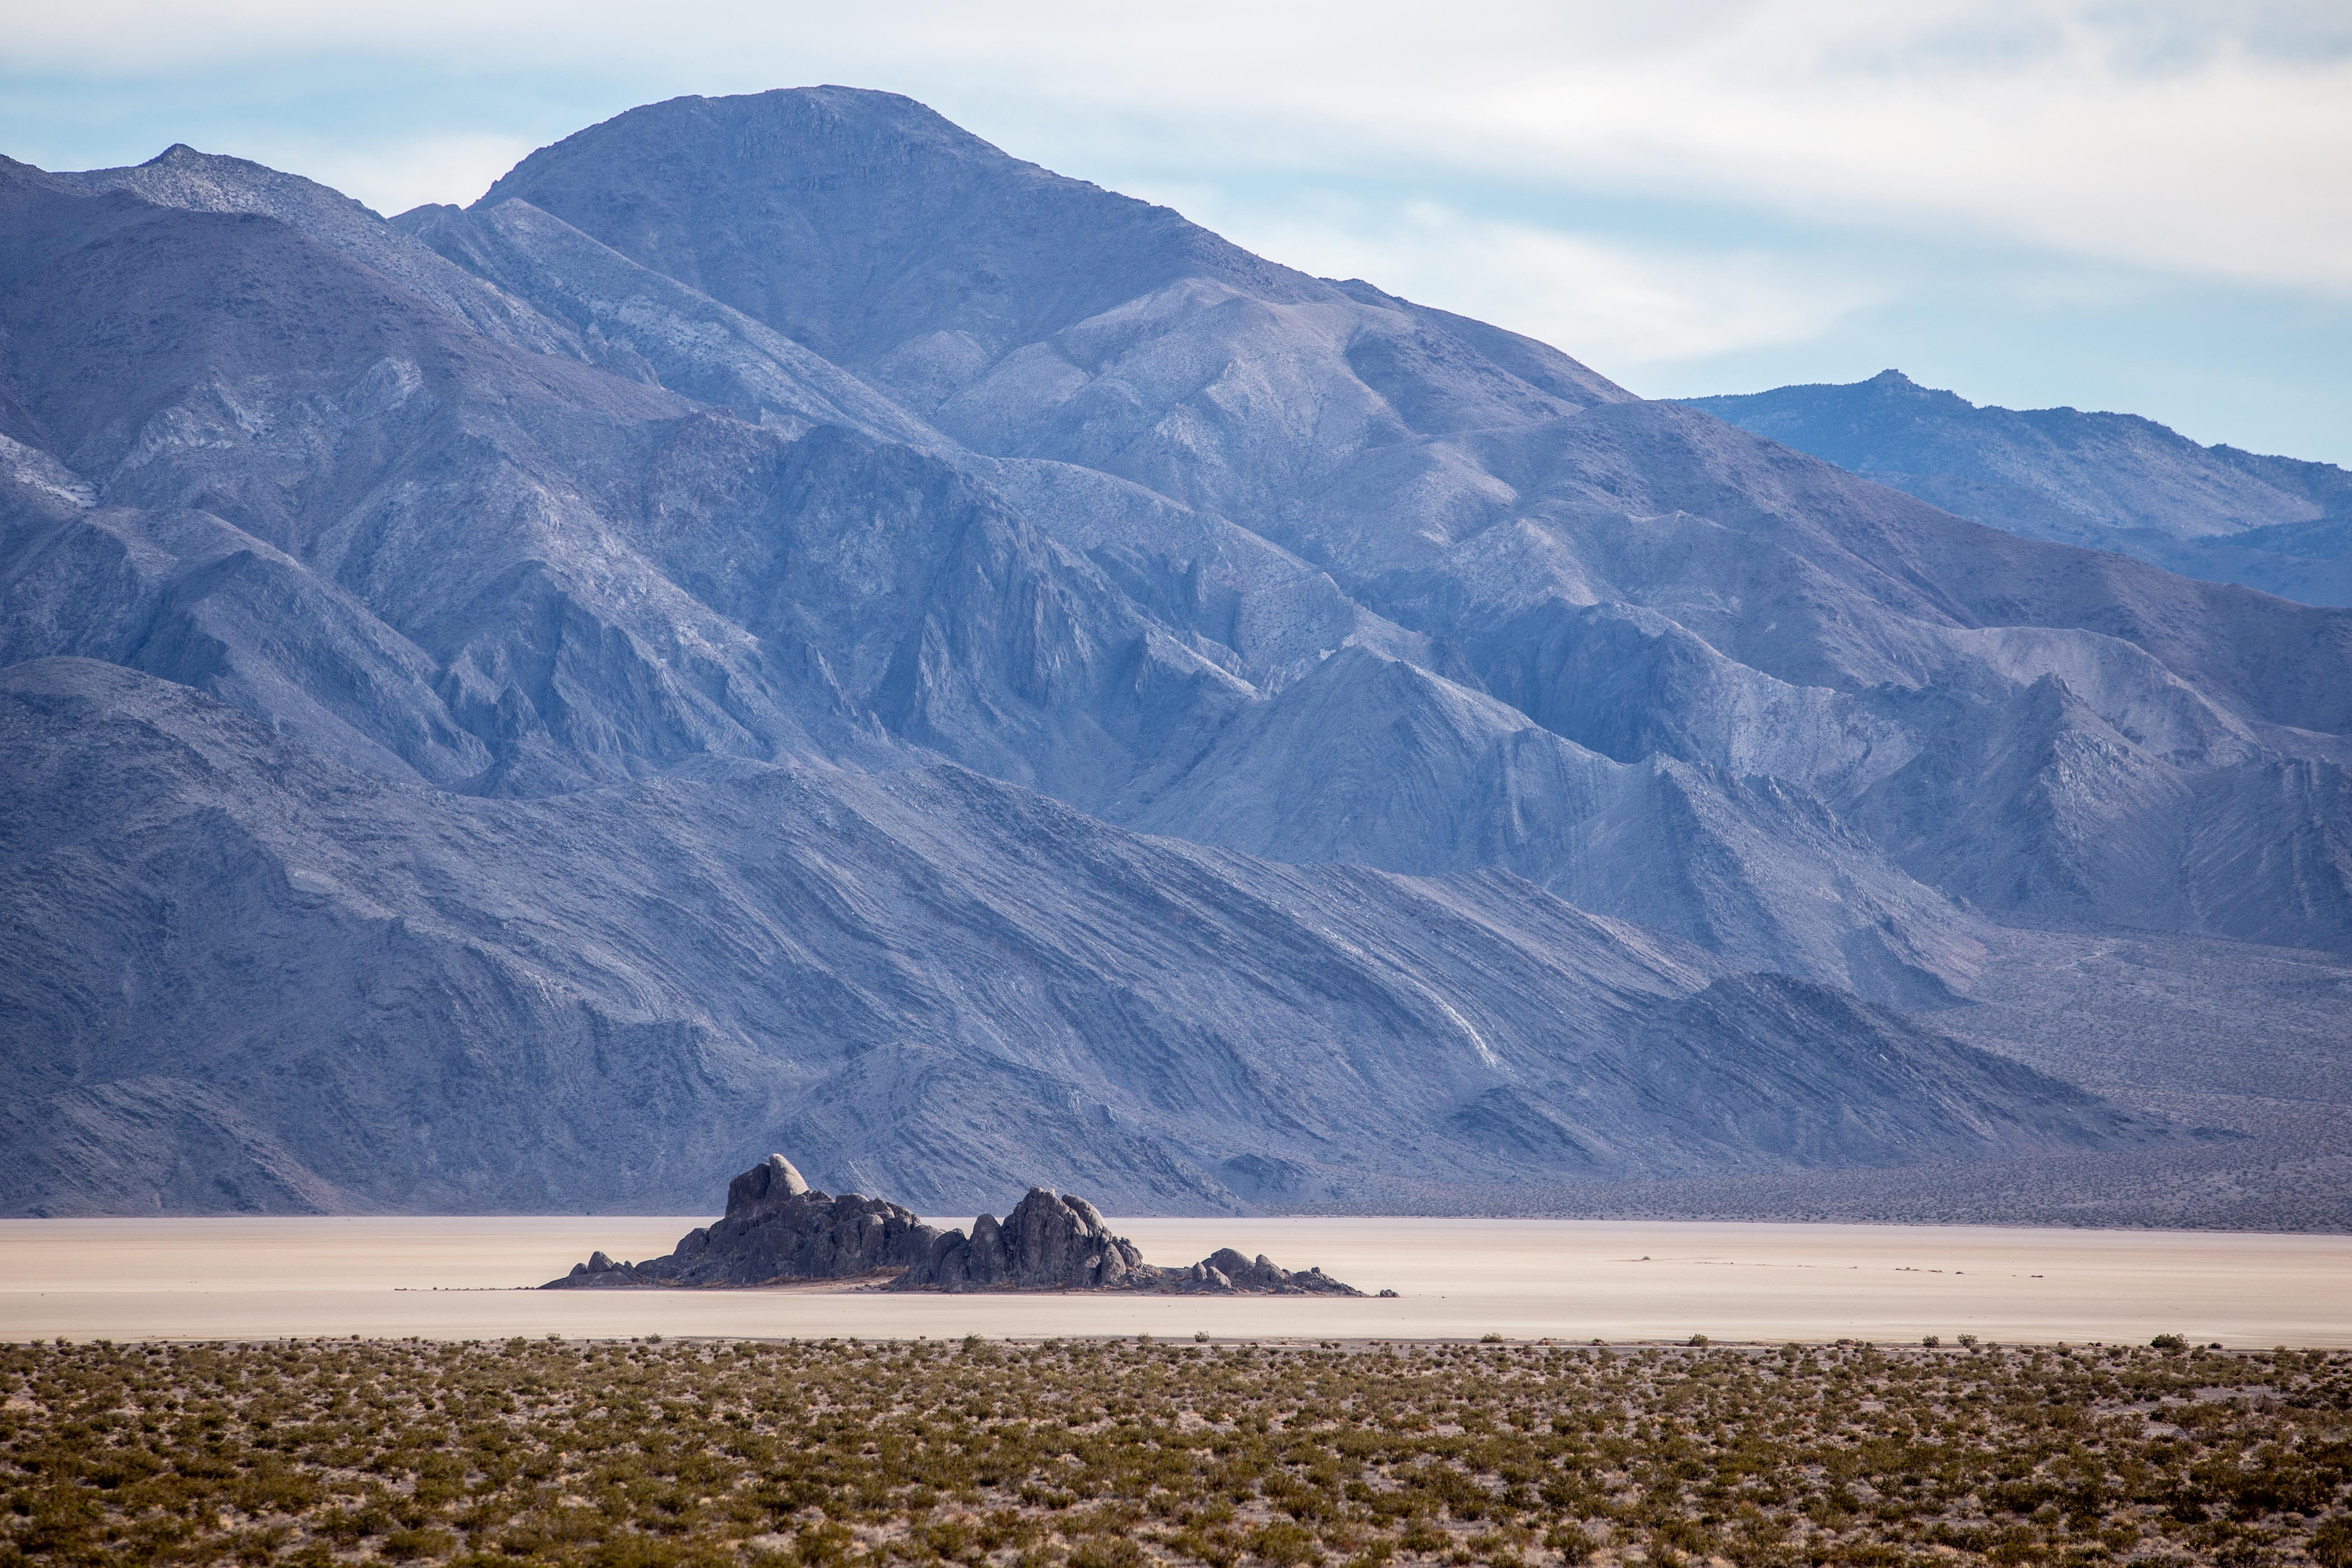 General 5205x3470 landscape Death Valley California nature desert mountains rocks shrubs USA